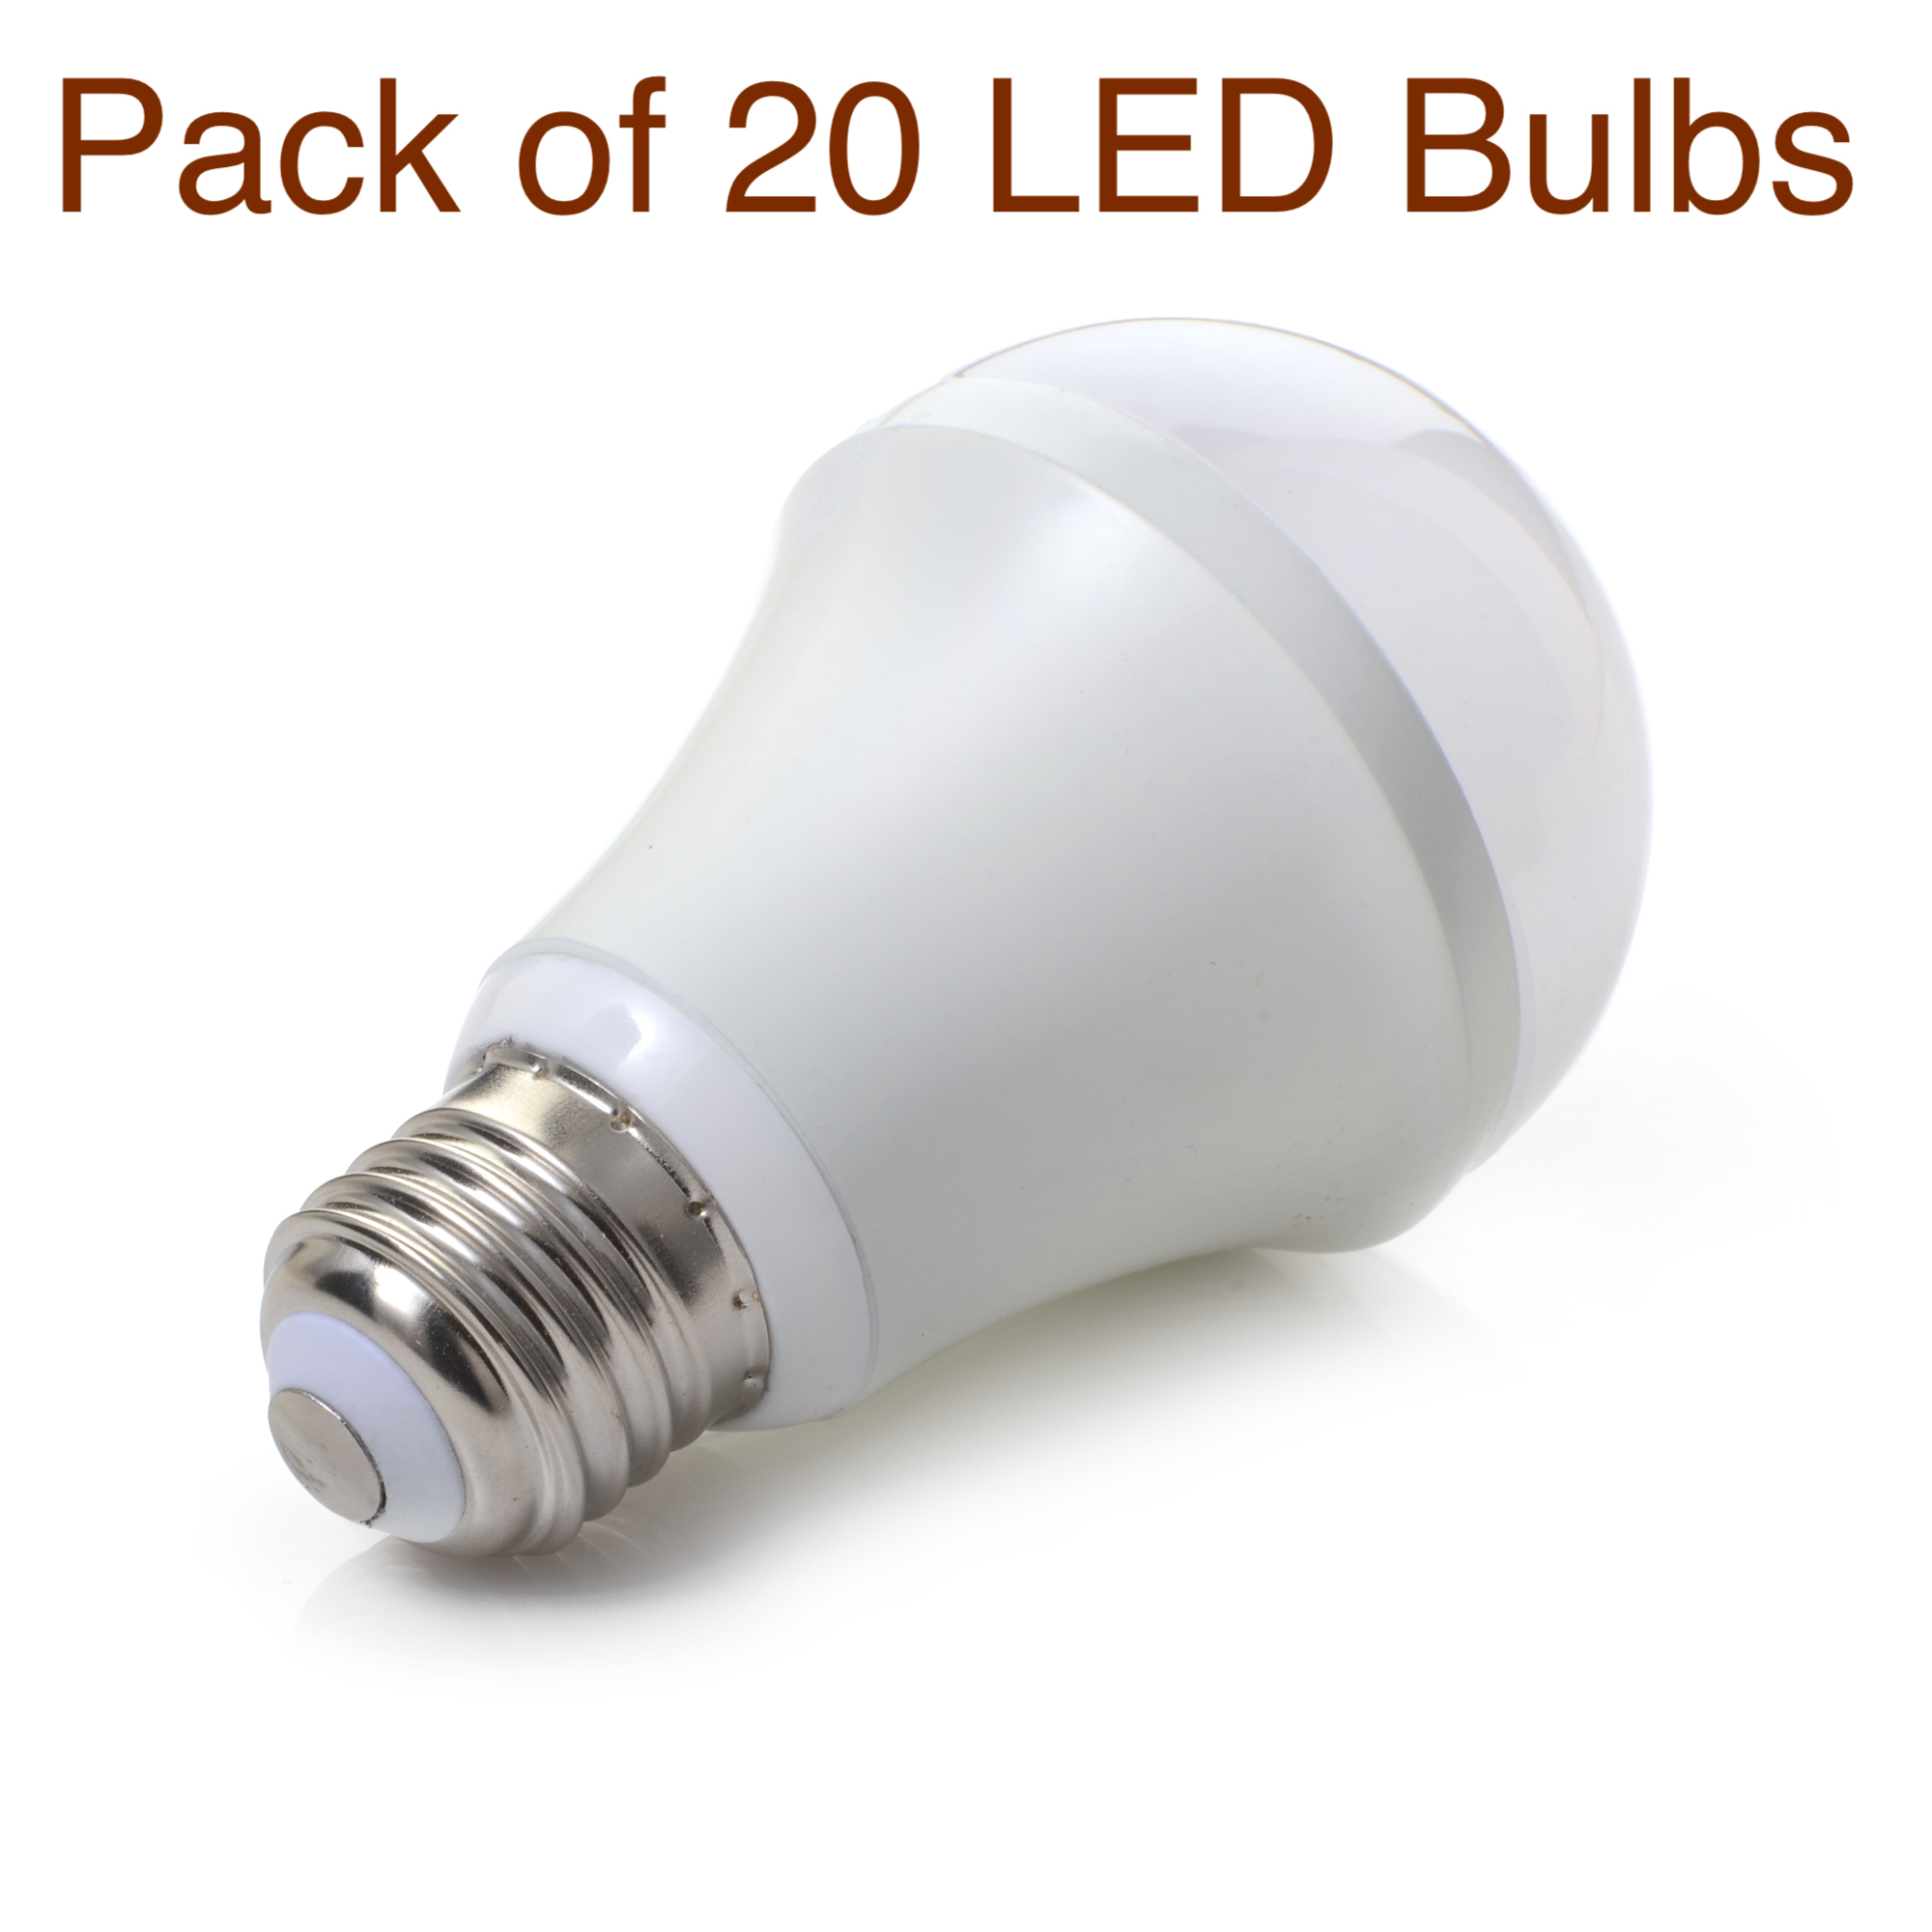 Pack of 20 Classic A19 / E26 LED Bulb 9 Watt 800 Lumen 3000K Warm White - Savvy Decorator